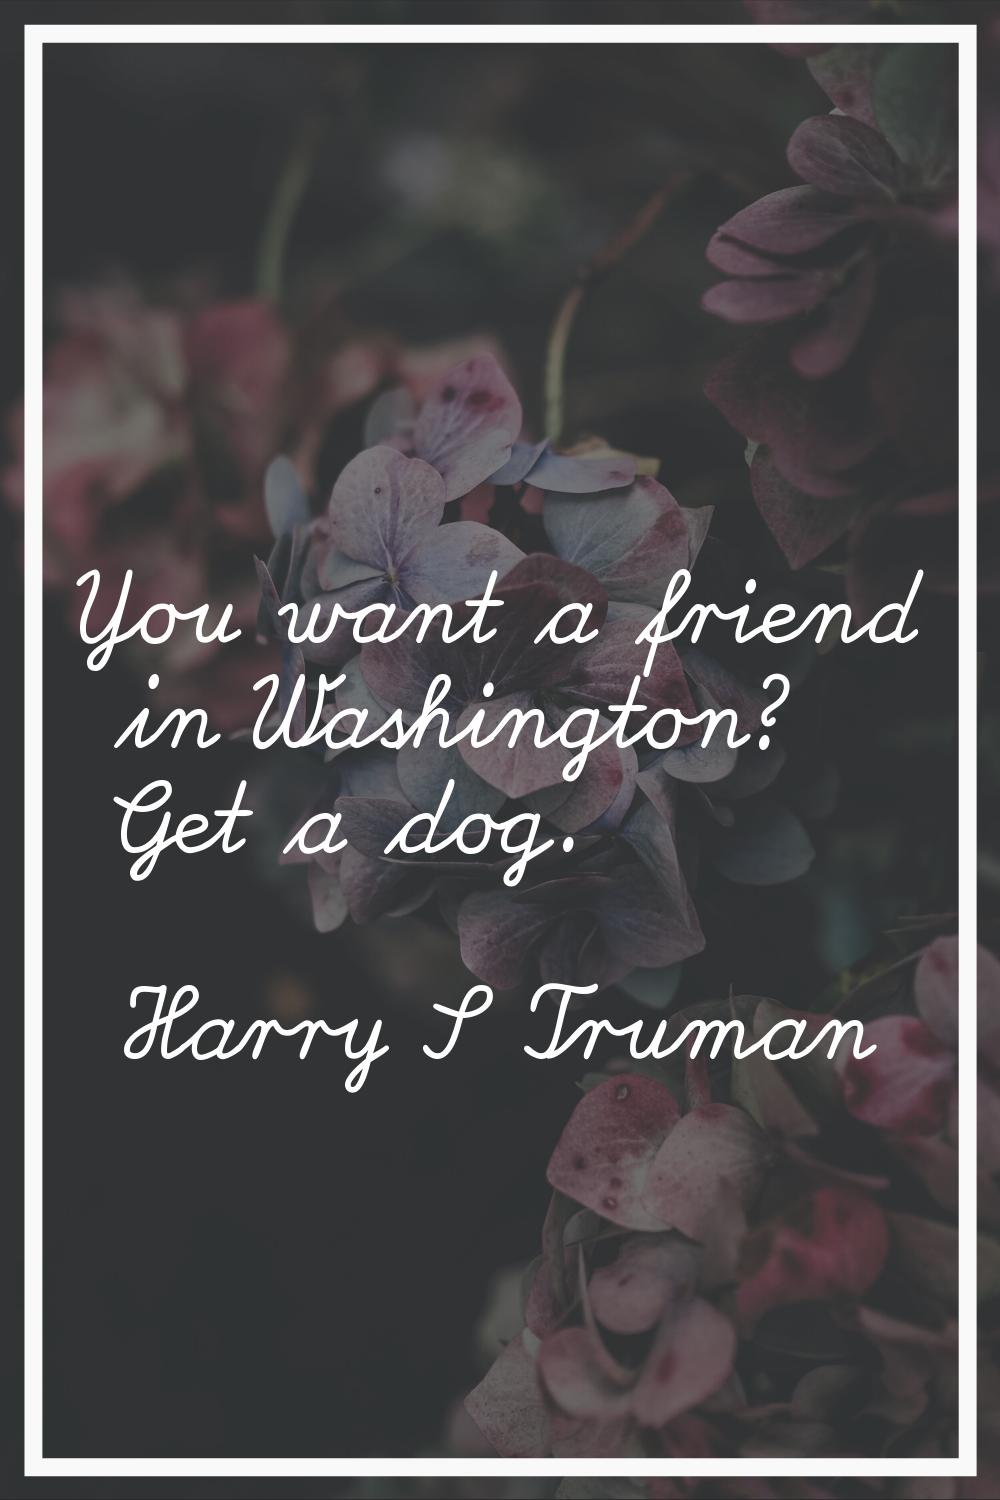 You want a friend in Washington? Get a dog.